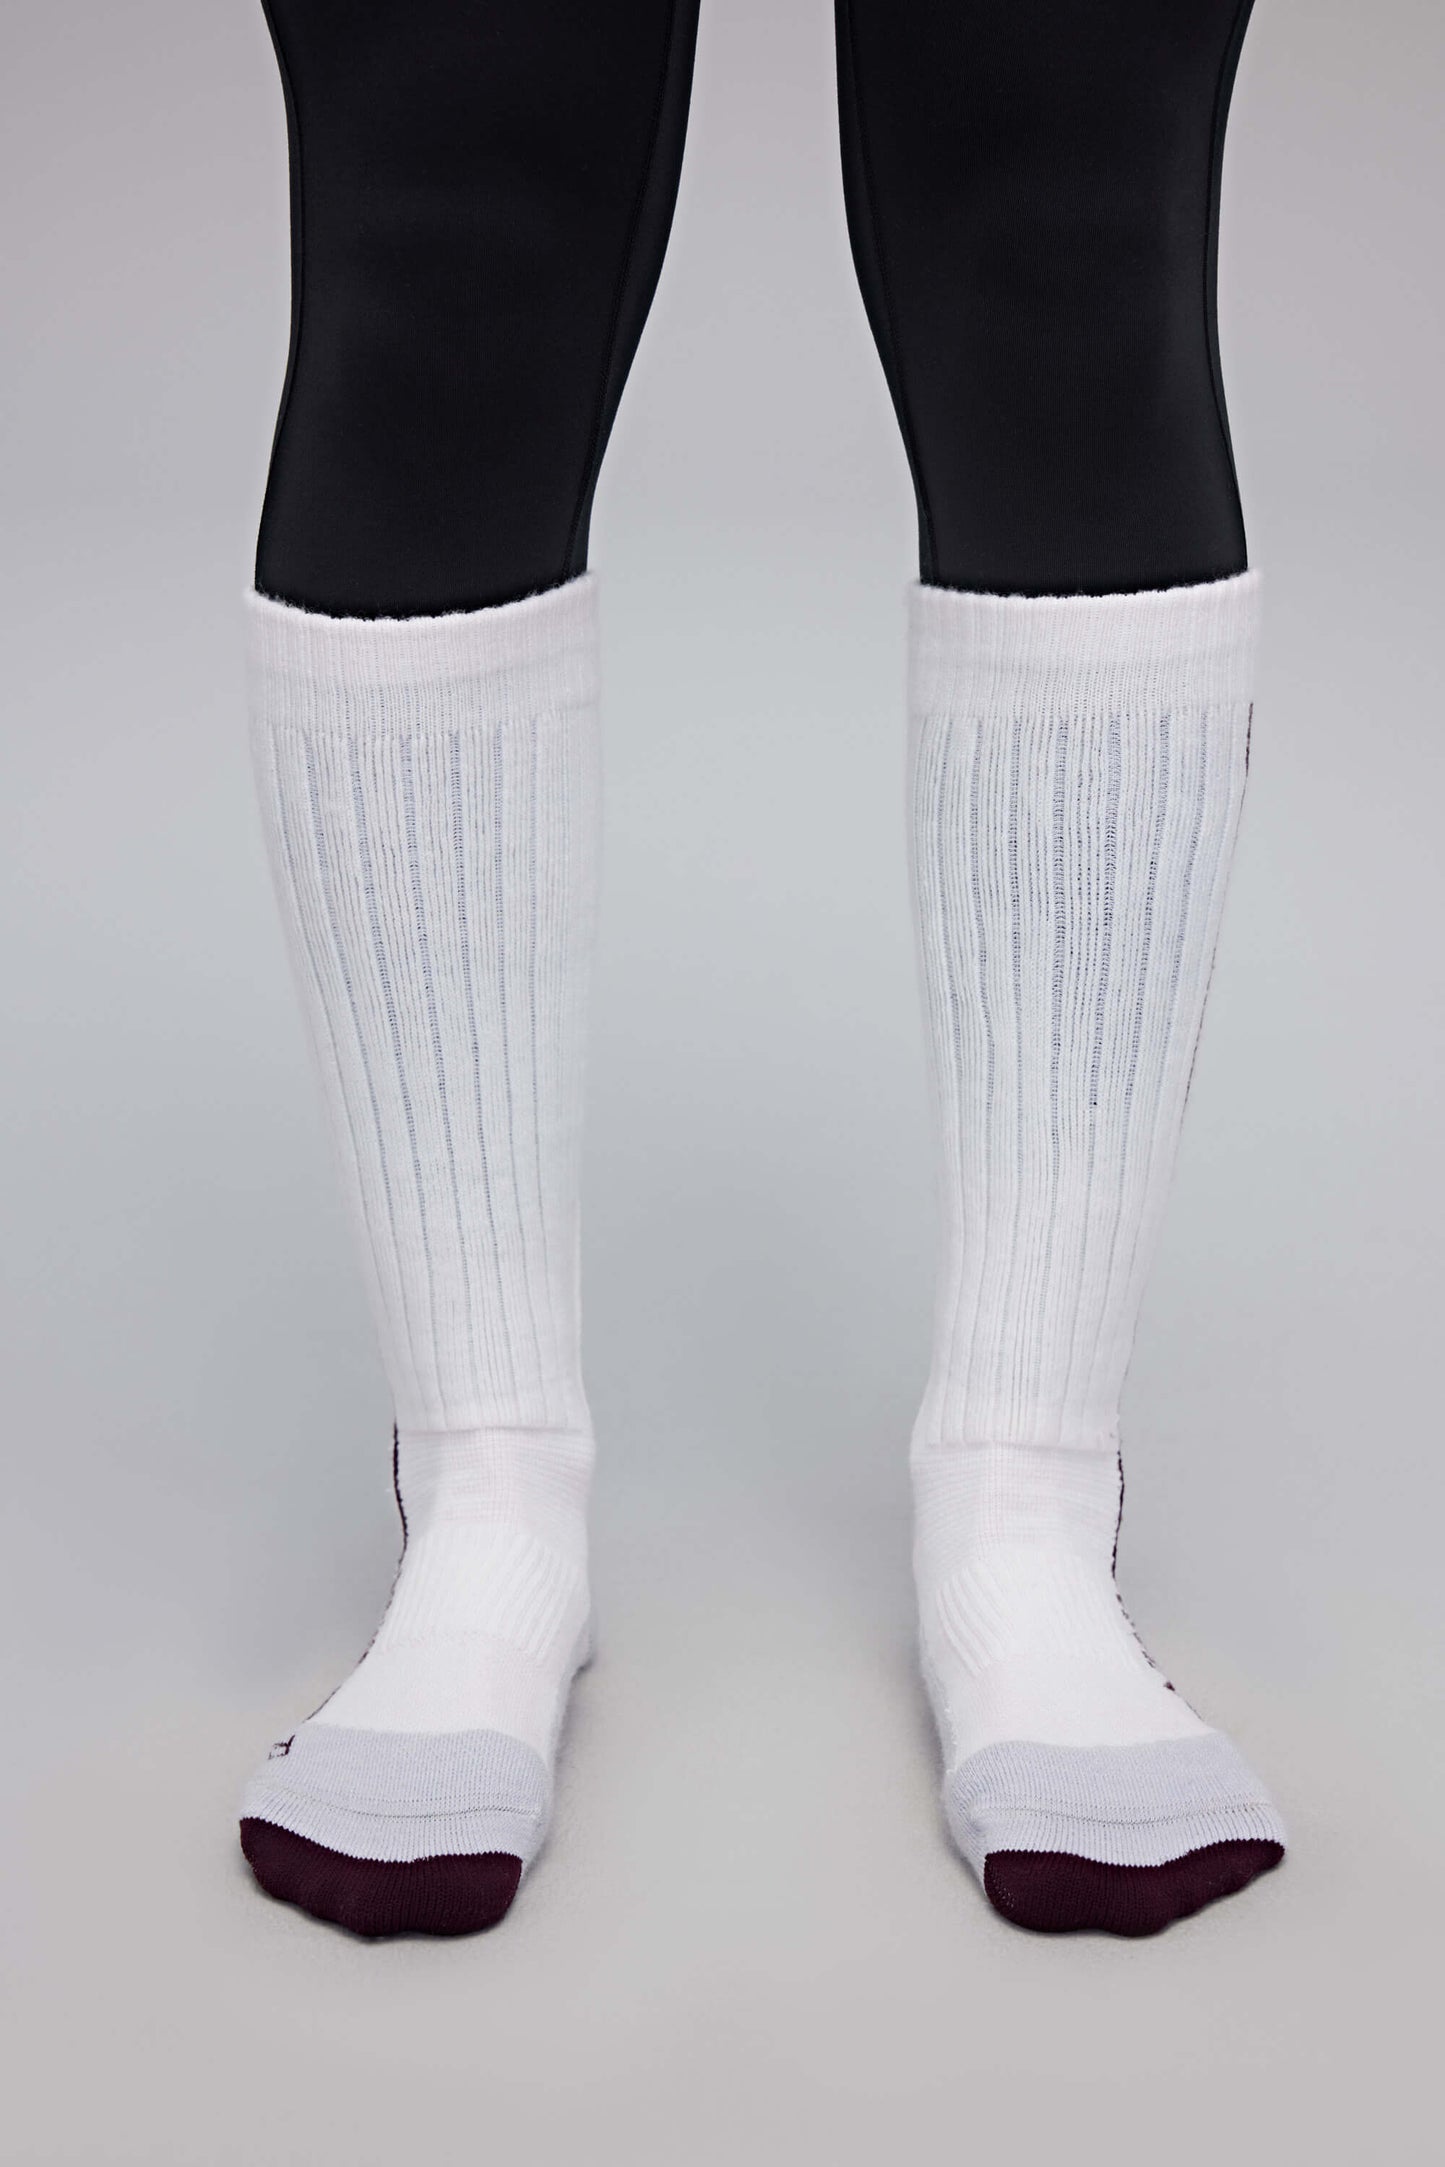 a person wearing white wool socks